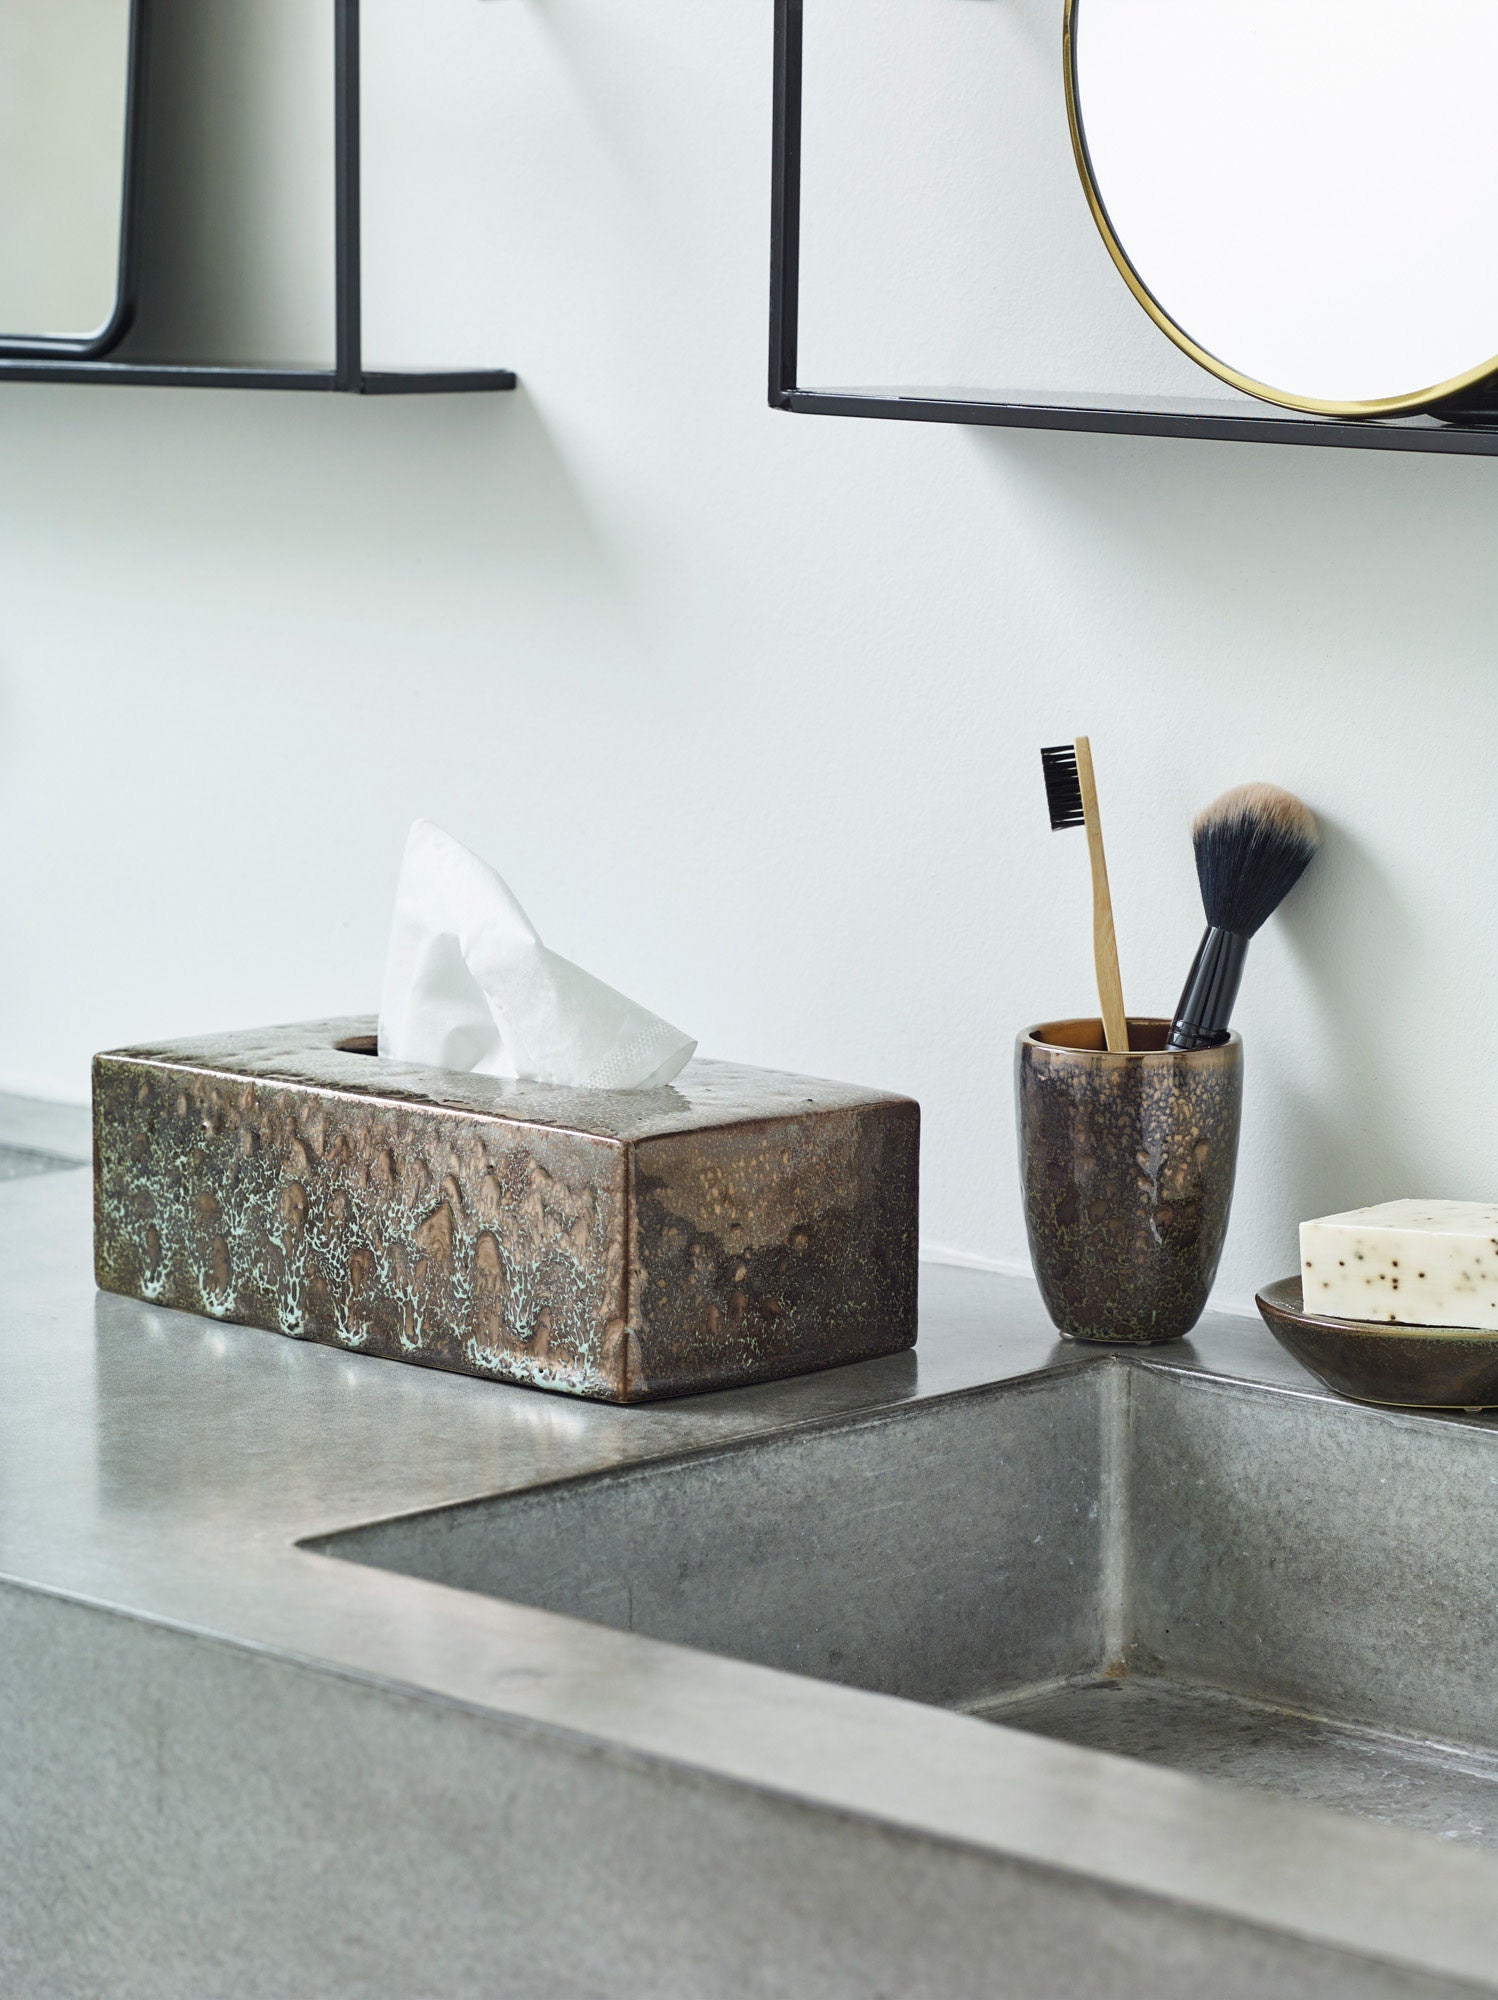 Vintage Bronze Bathroom Accessories - Tissue Holder - |VESIMI Design| Luxury and Rustic bathrooms online